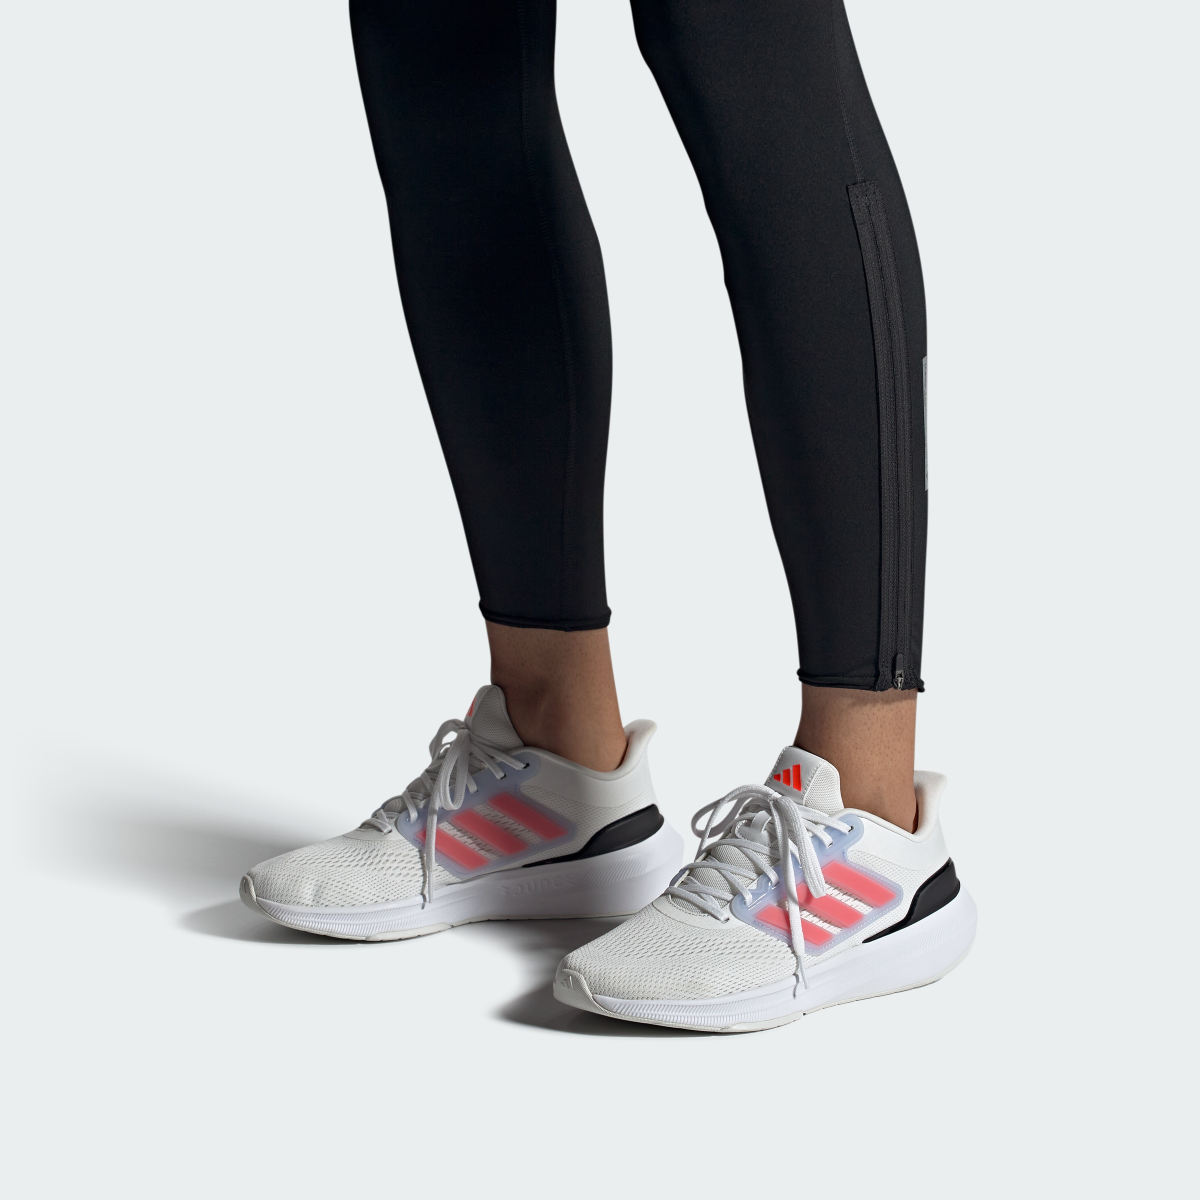 Adidas Ultrabounce Running Shoes. 5